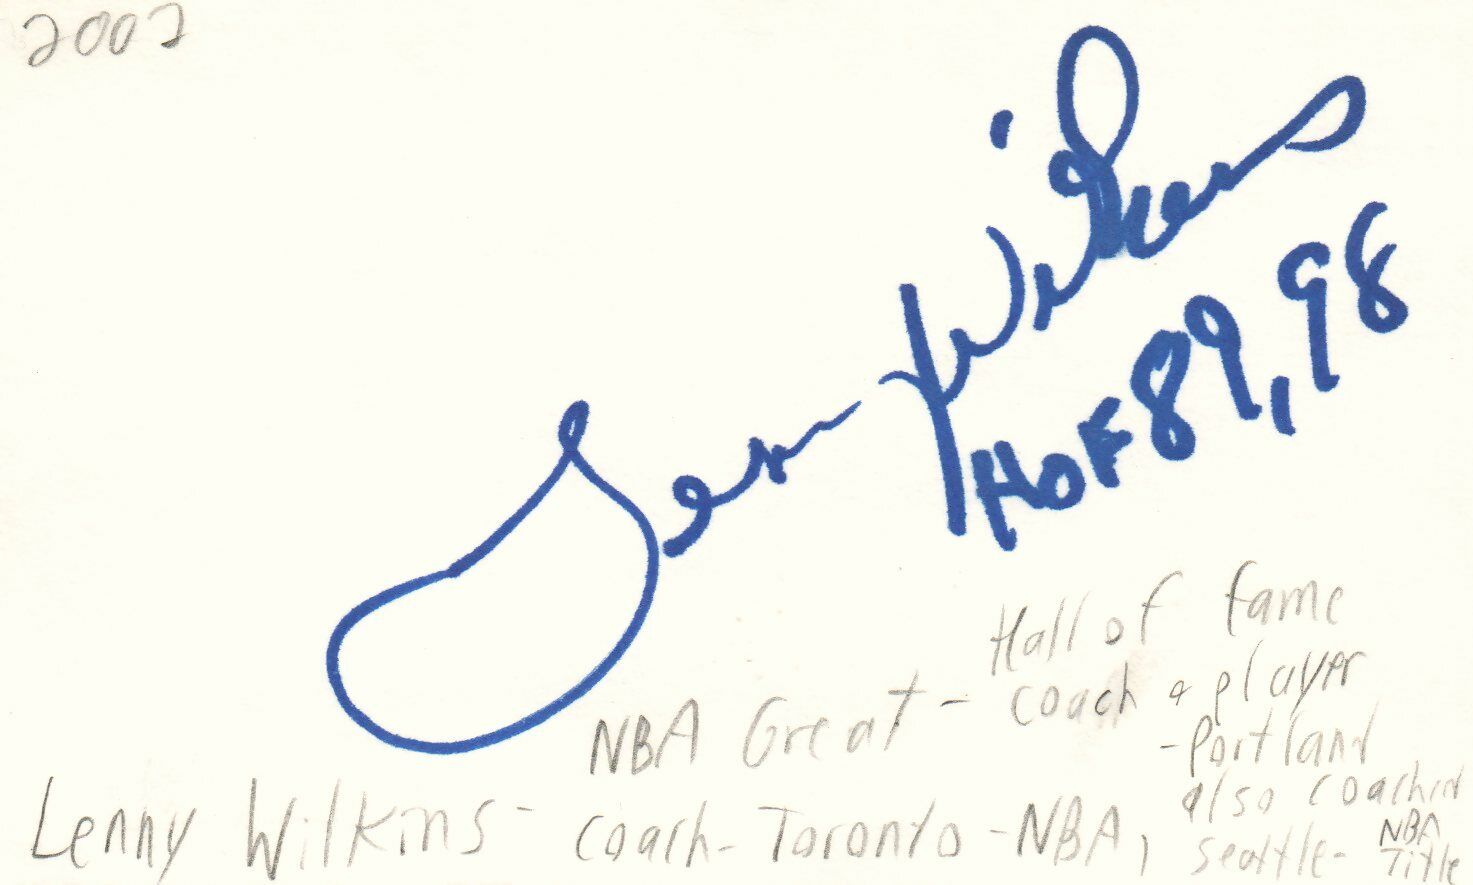 Lenny Wilkens College NBA HOF Coach Autographed Signed Index Card JSA COA